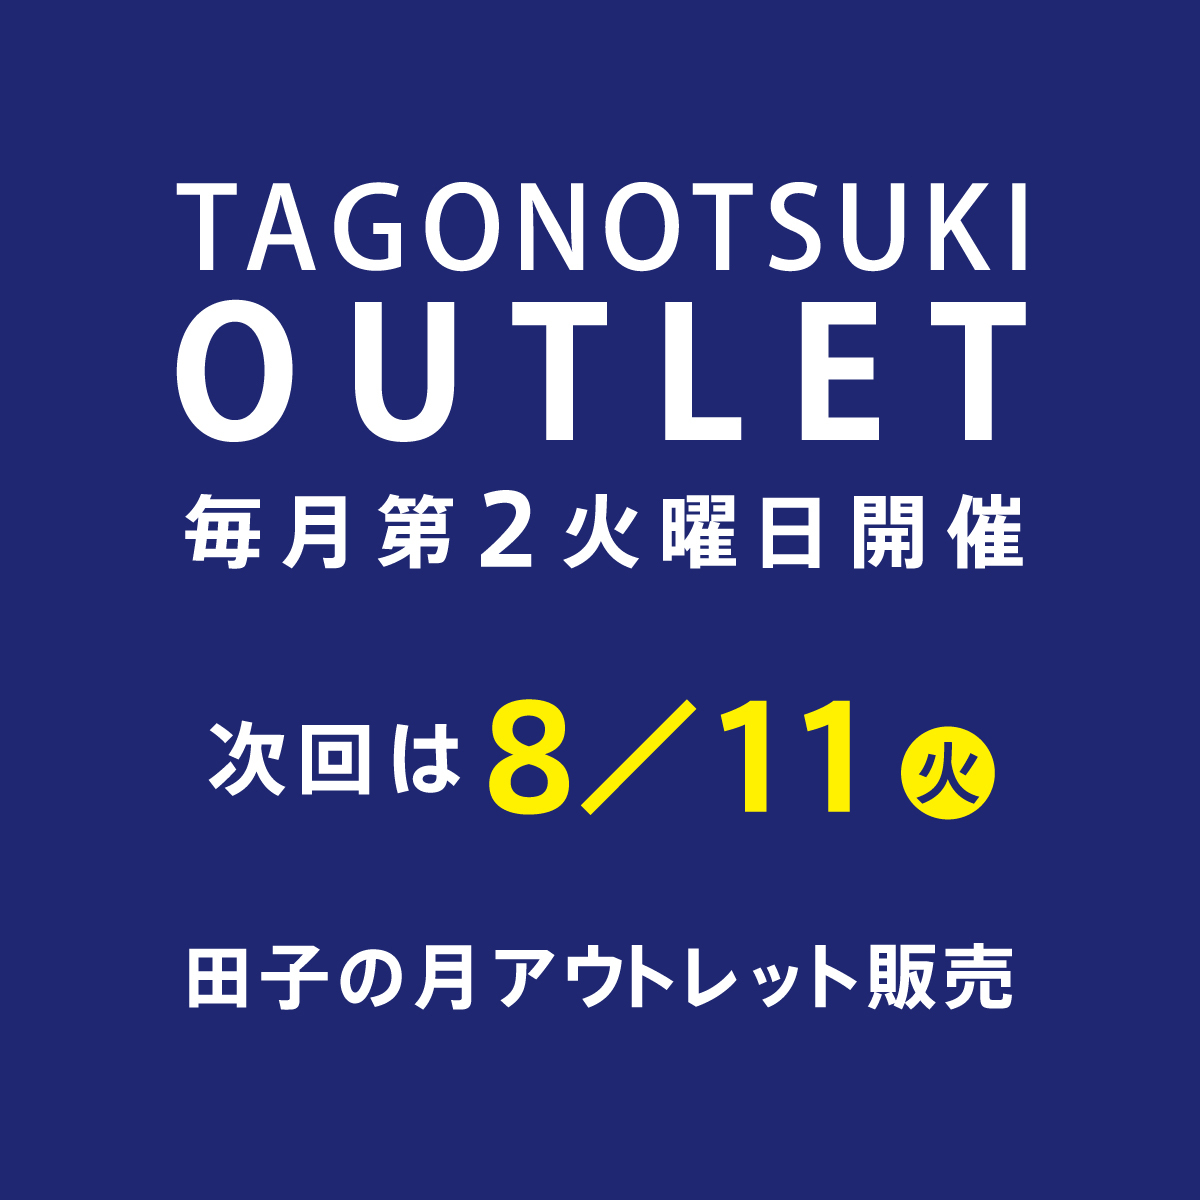 TAGONOTSUKIOUTLET毎月第2火曜日開催次回は8/11田子の月アウトレット販売